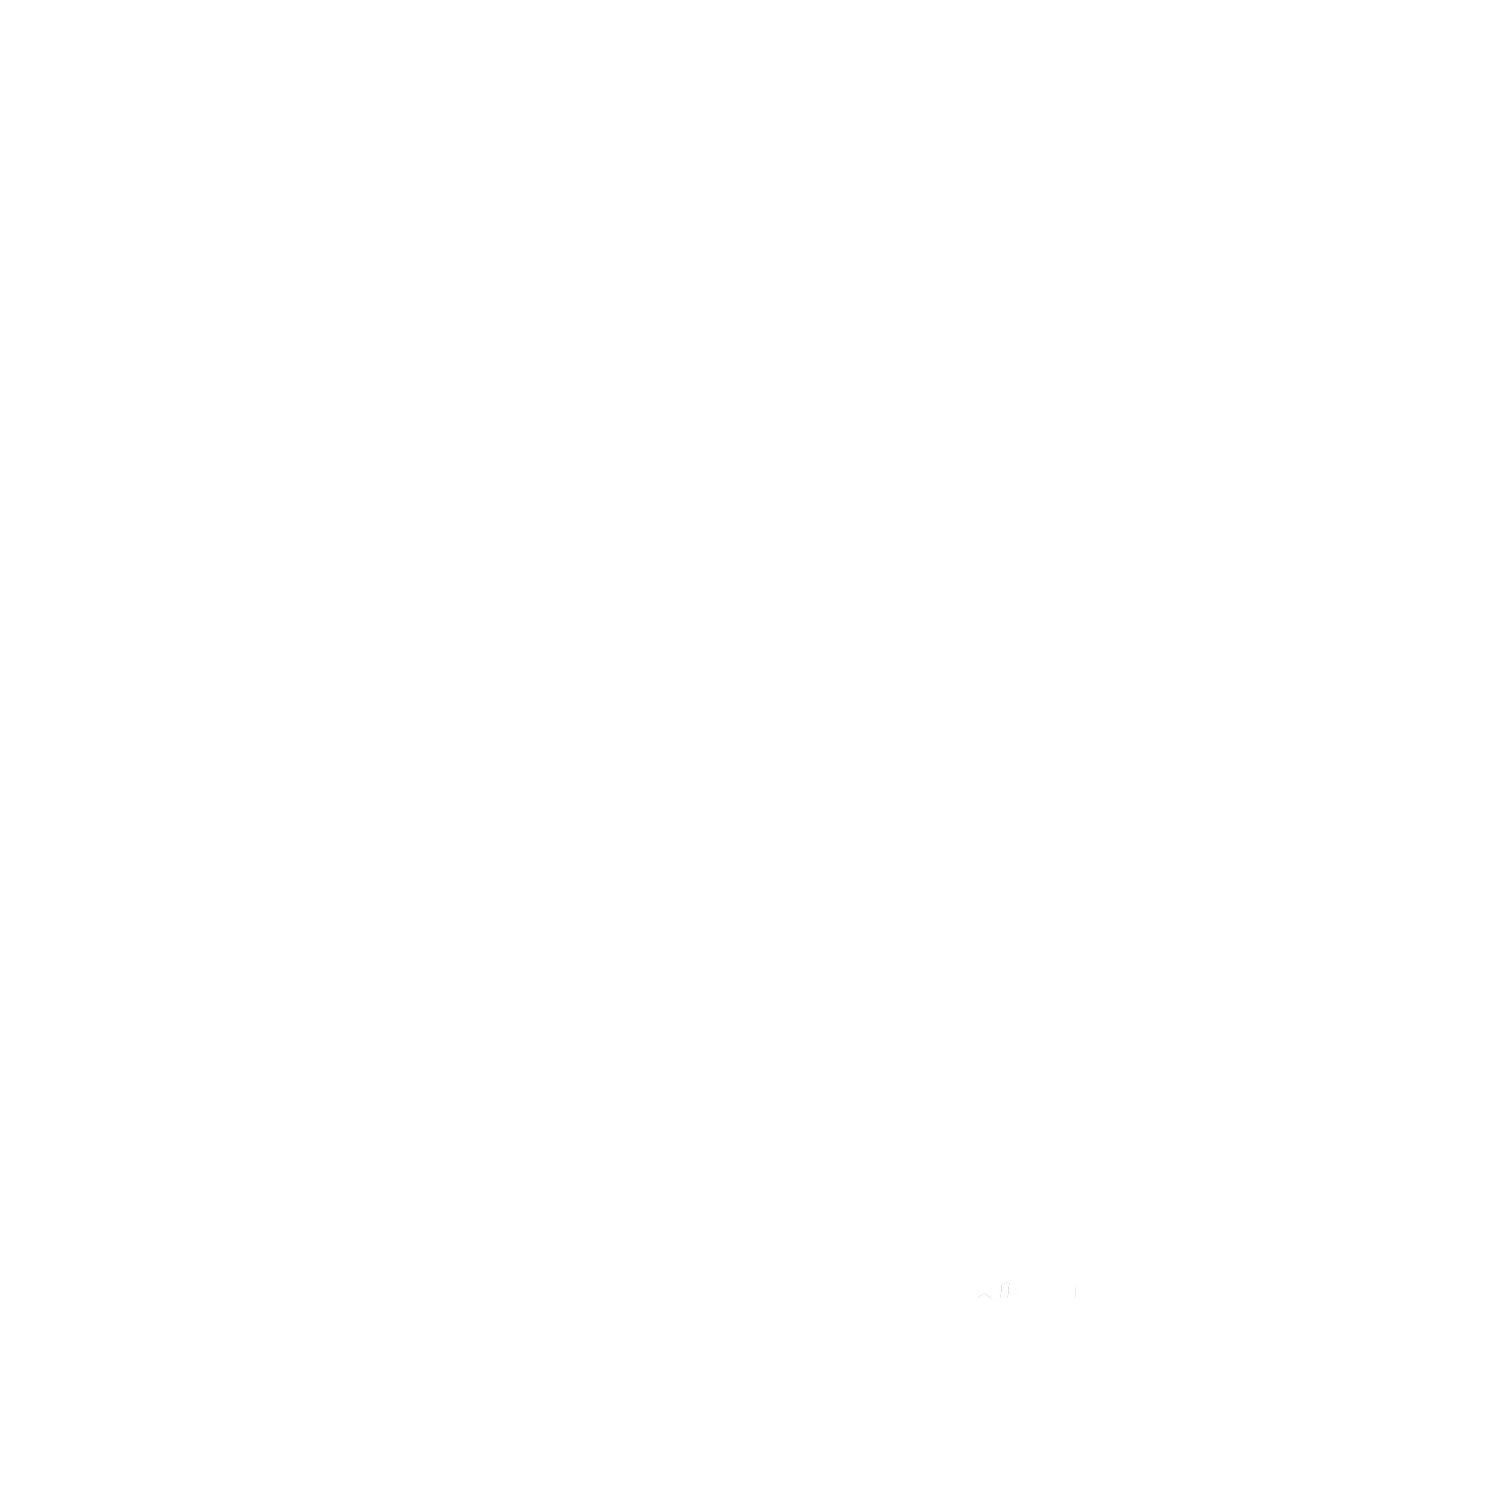 Grace Church Lake Mary